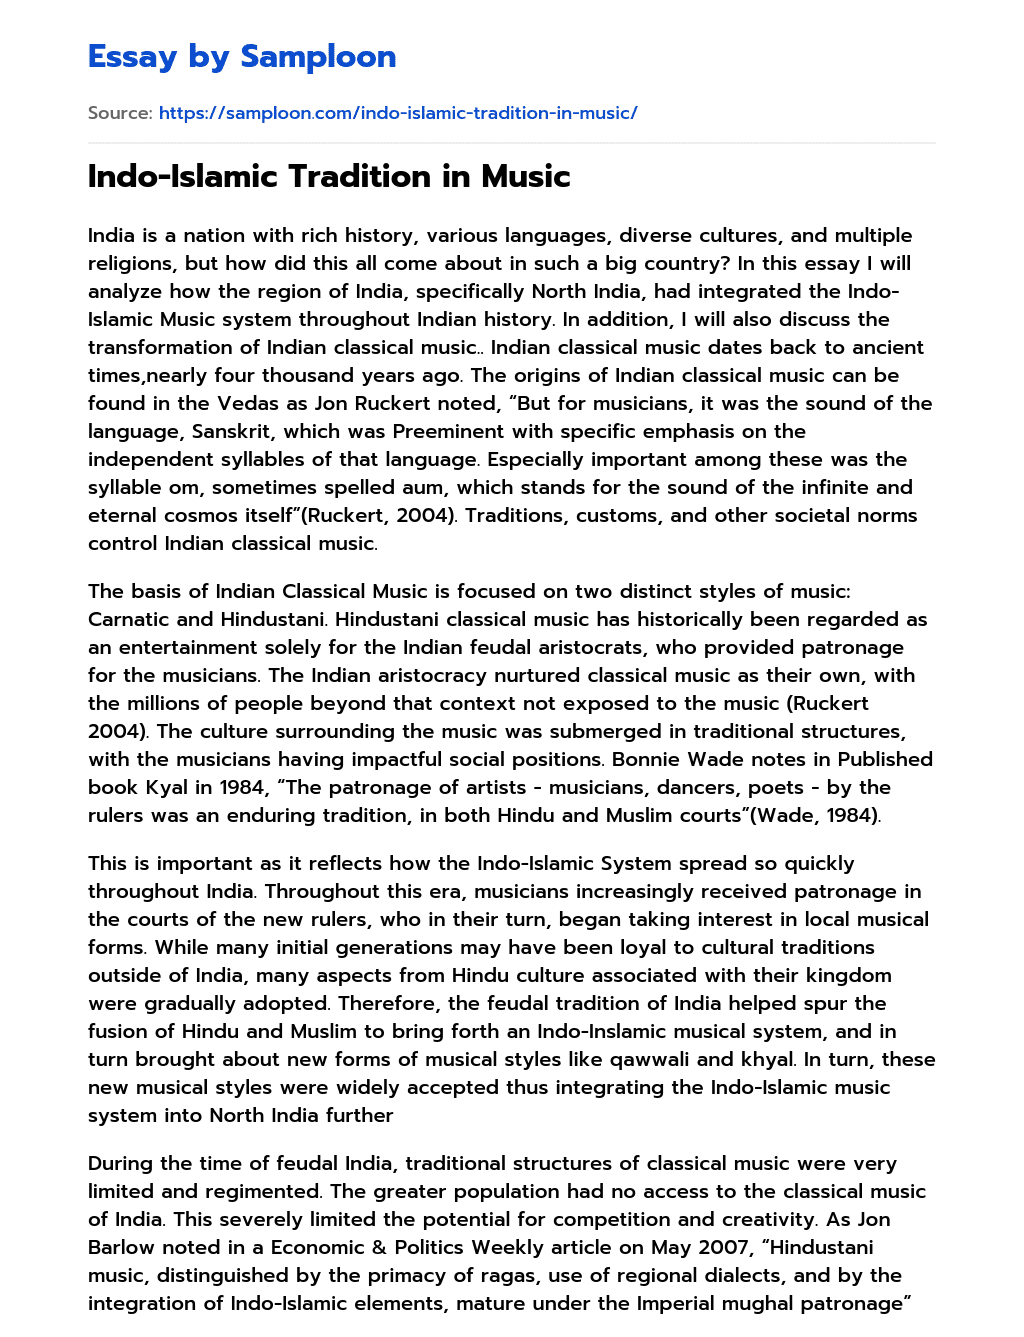 Indo-Islamic Tradition in Music essay